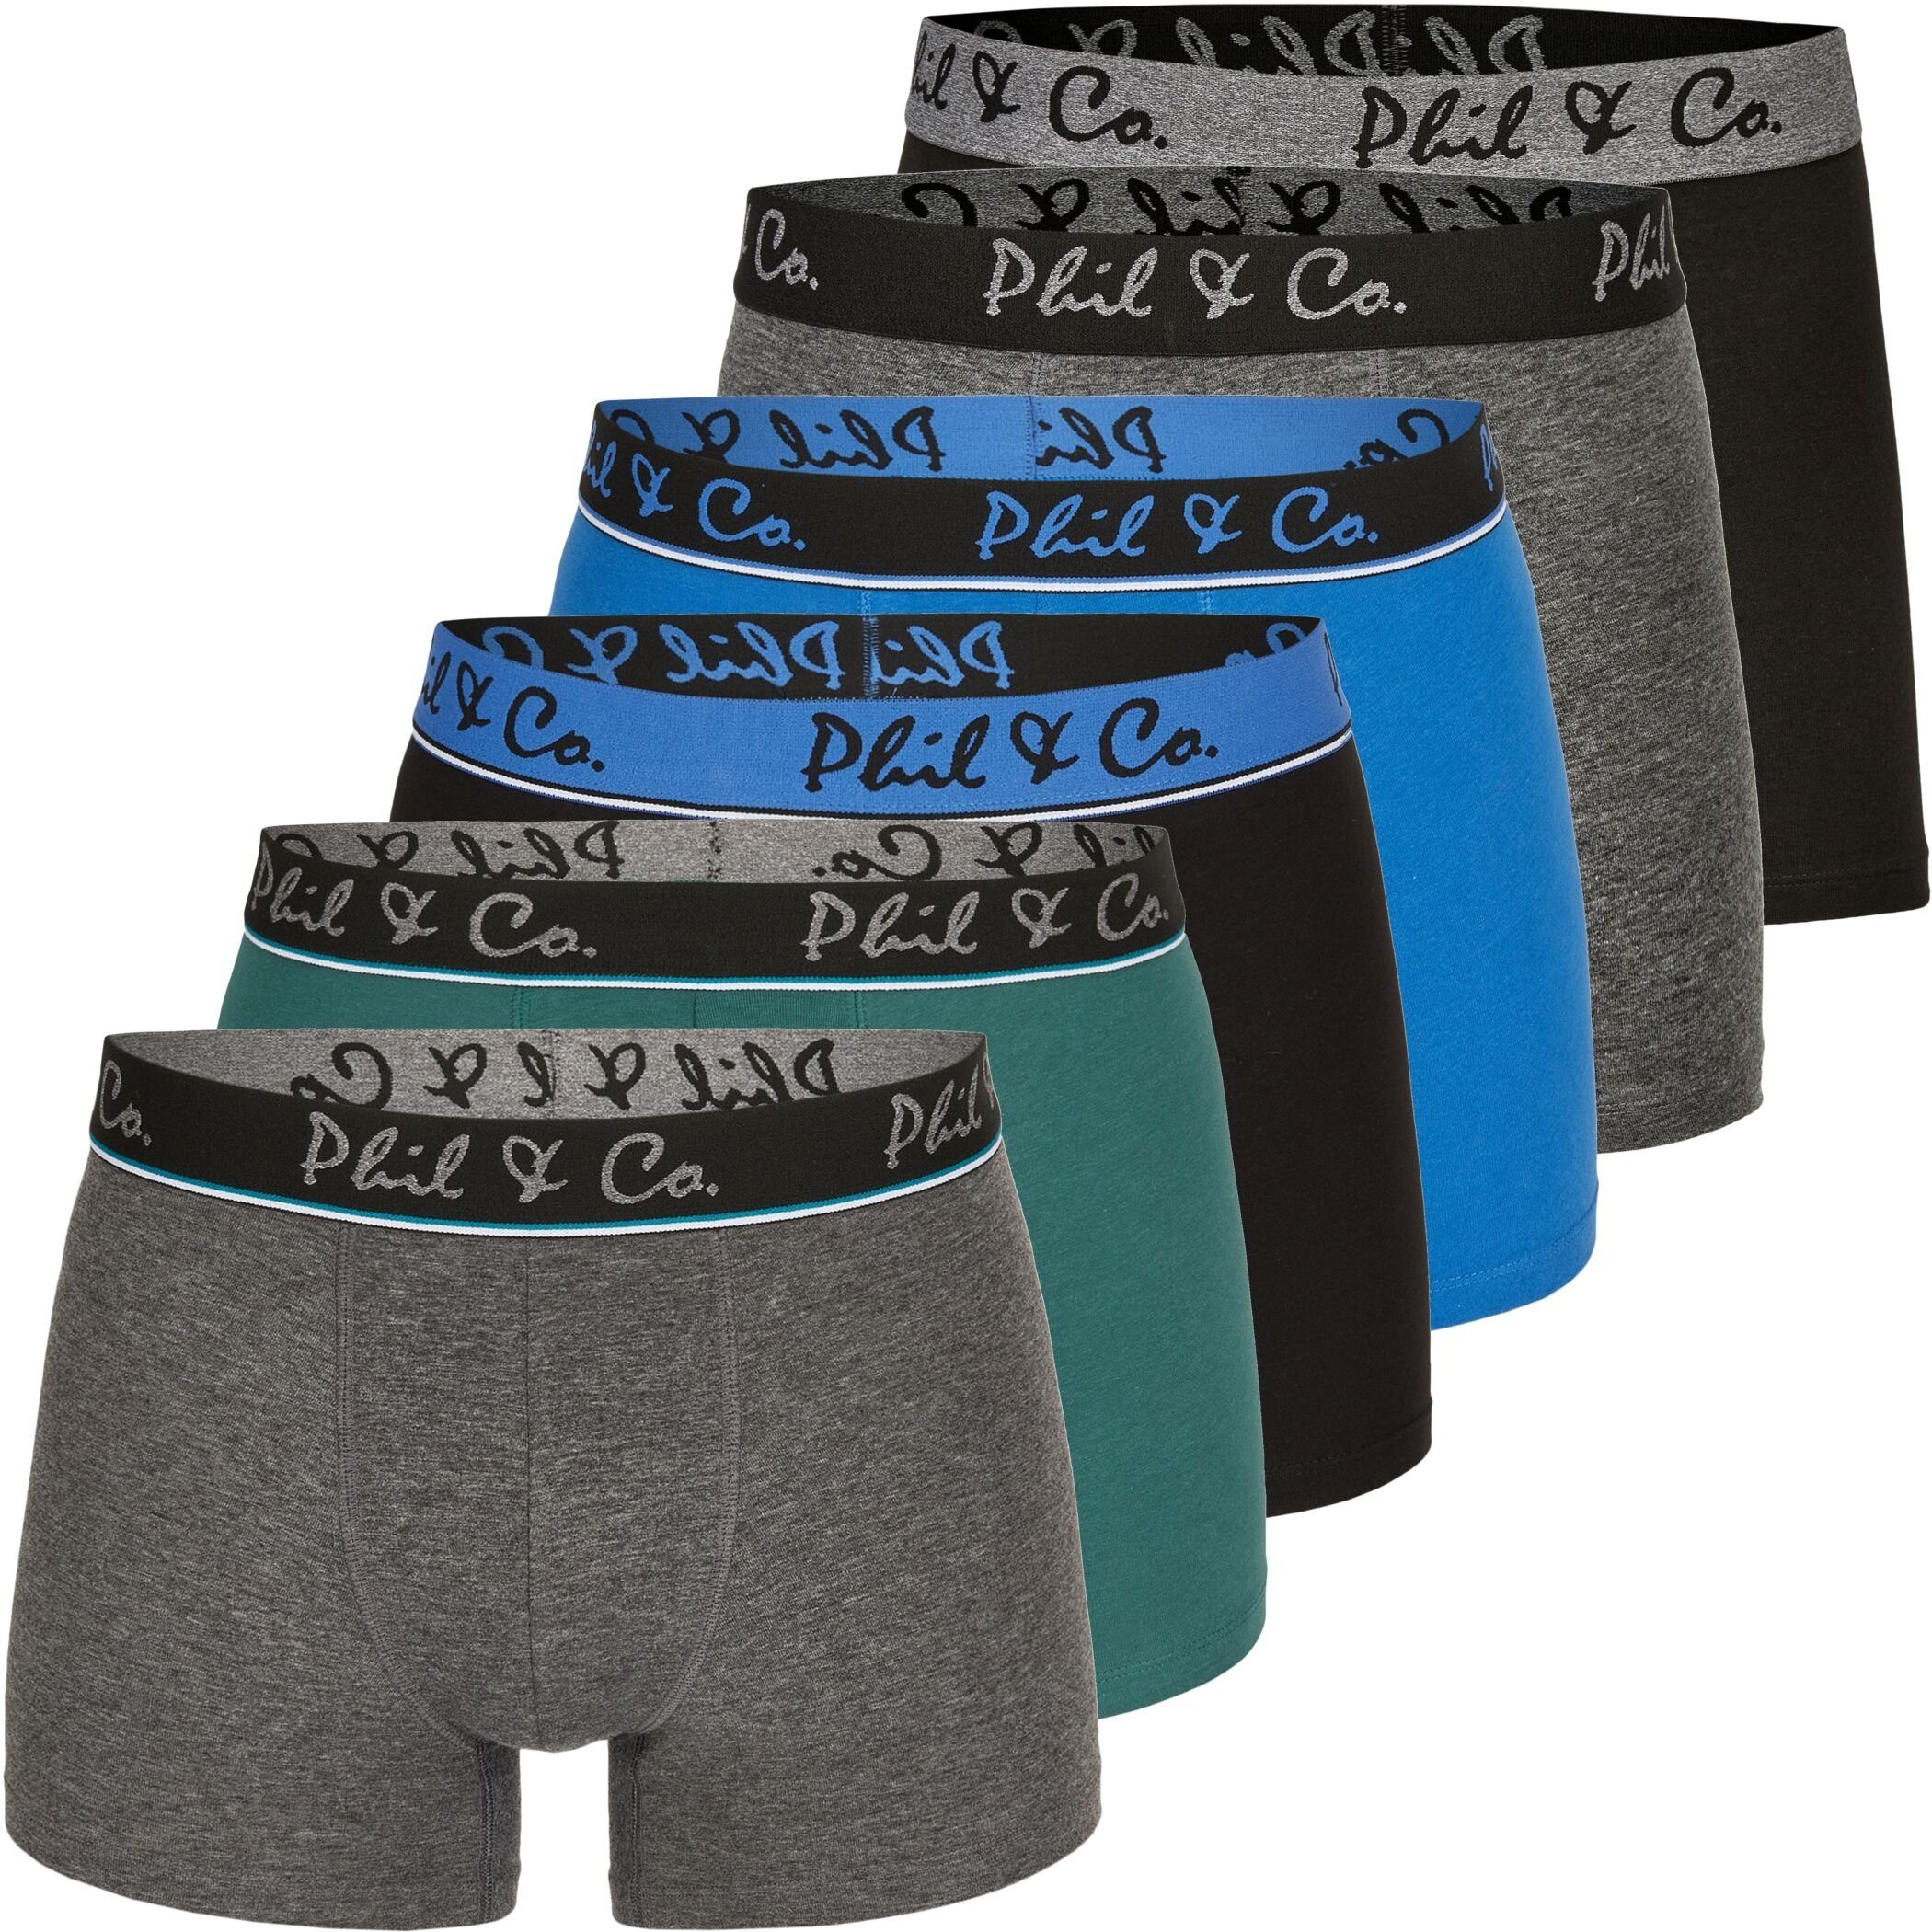 Phil & Co. Boxershorts 6er FARBWAHL Jersey Trunk Short Pant DESIGN Co (1-St) Boxershorts Pack Berlin Phil 22 &